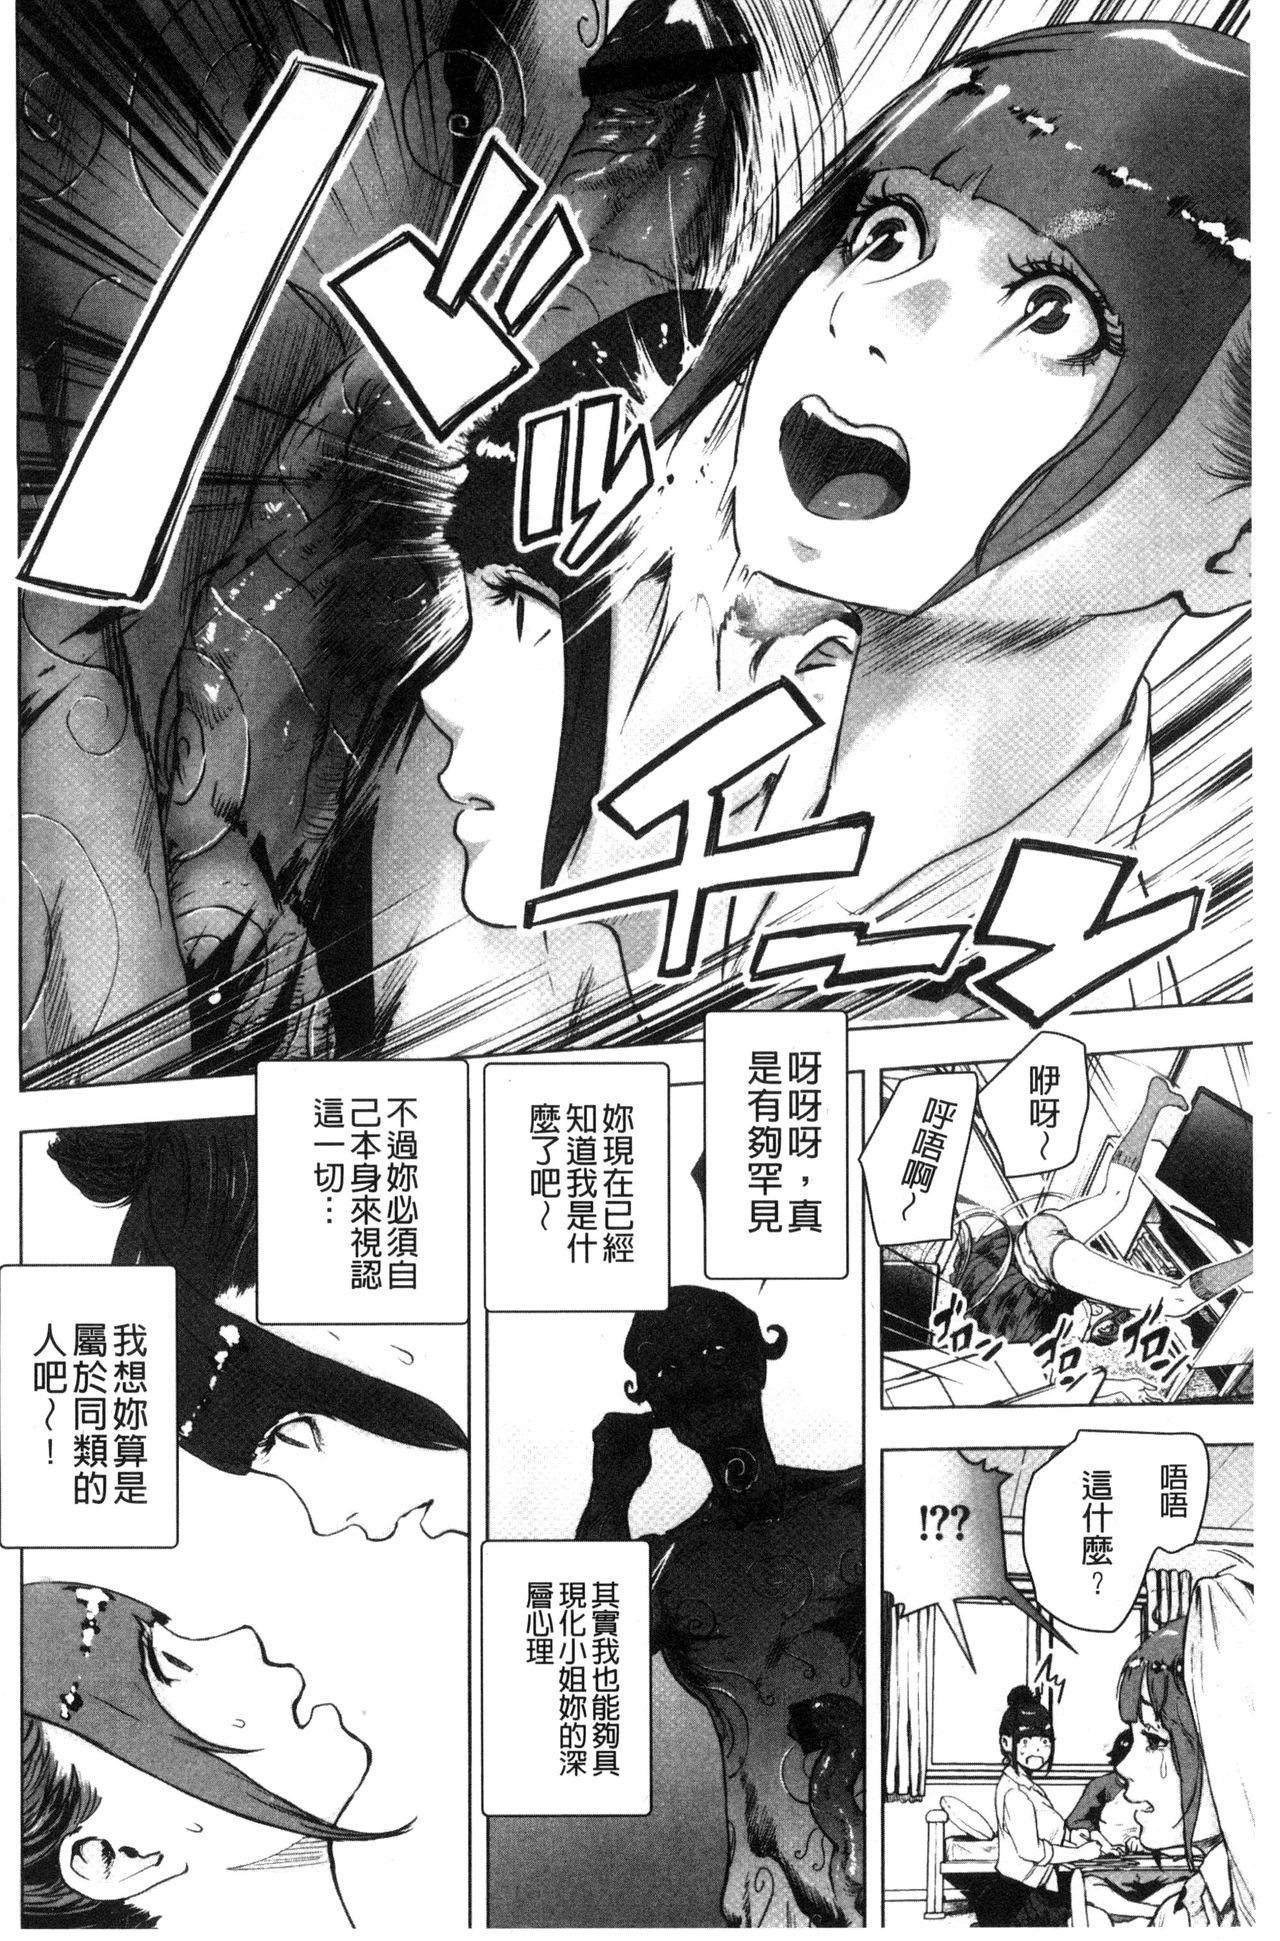 Leche #Futsuu no Onnanoko | 很普通平凡的女孩子 Jerk - Page 9